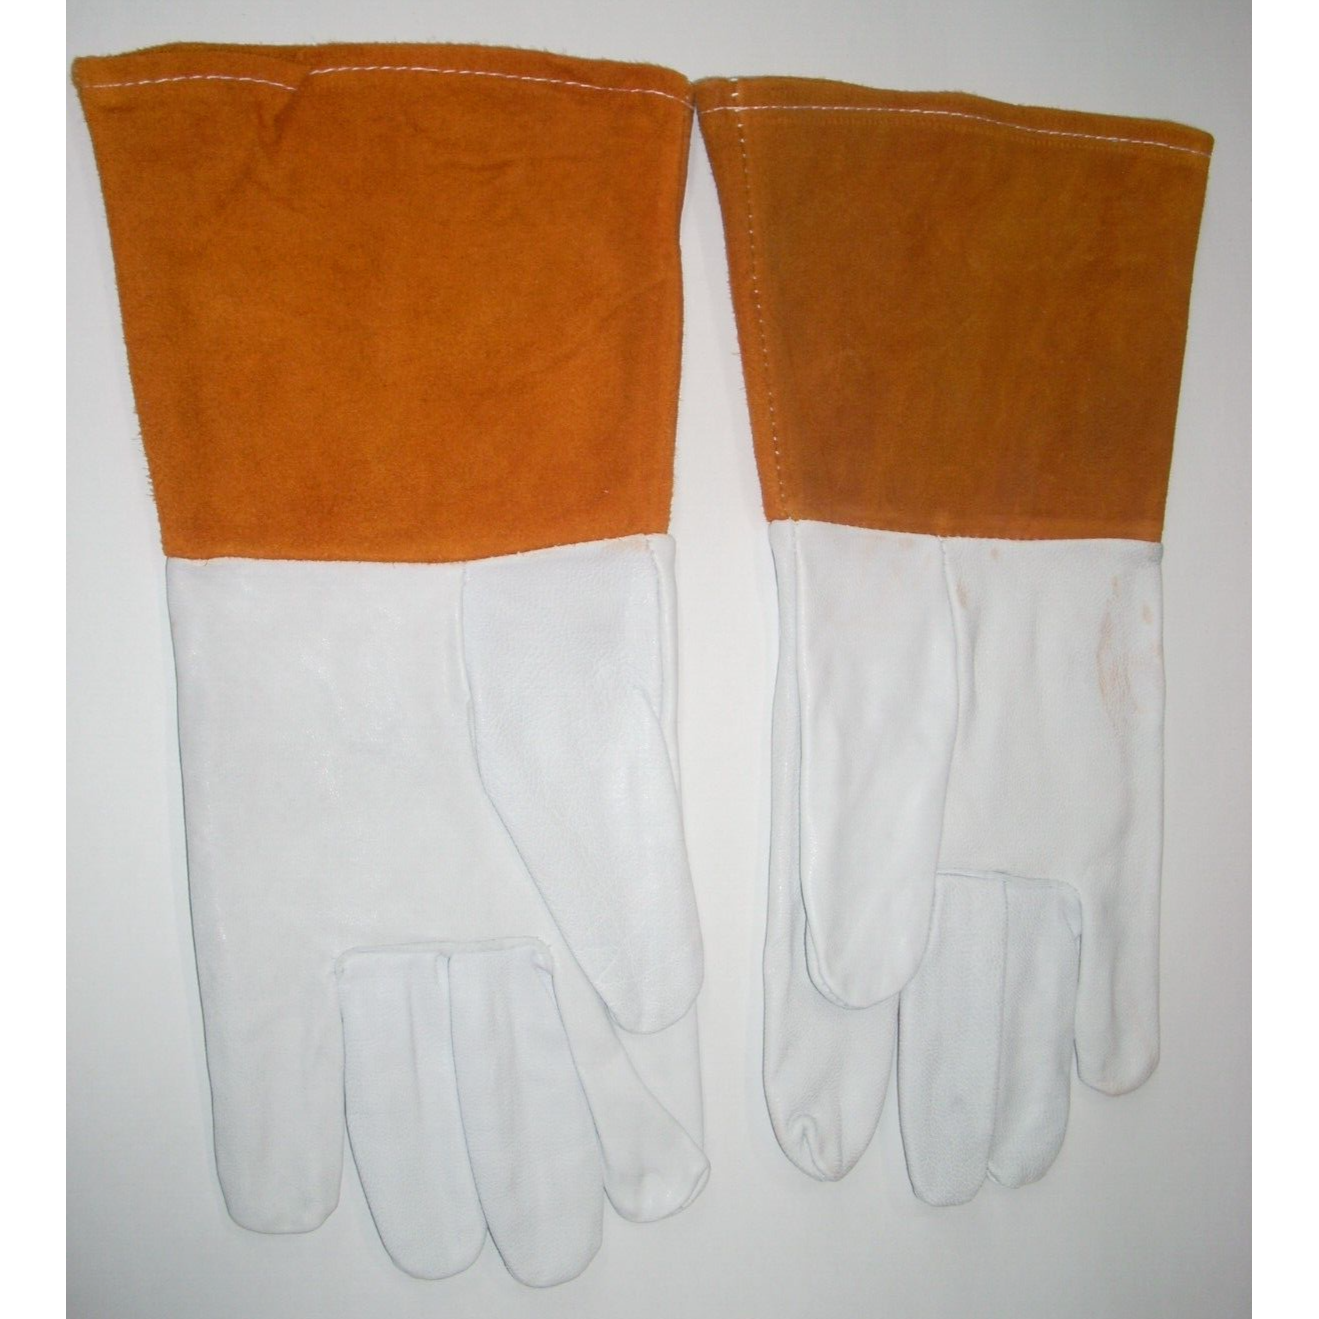 Mig Tig Welding Goatskin Welding Gloves Large